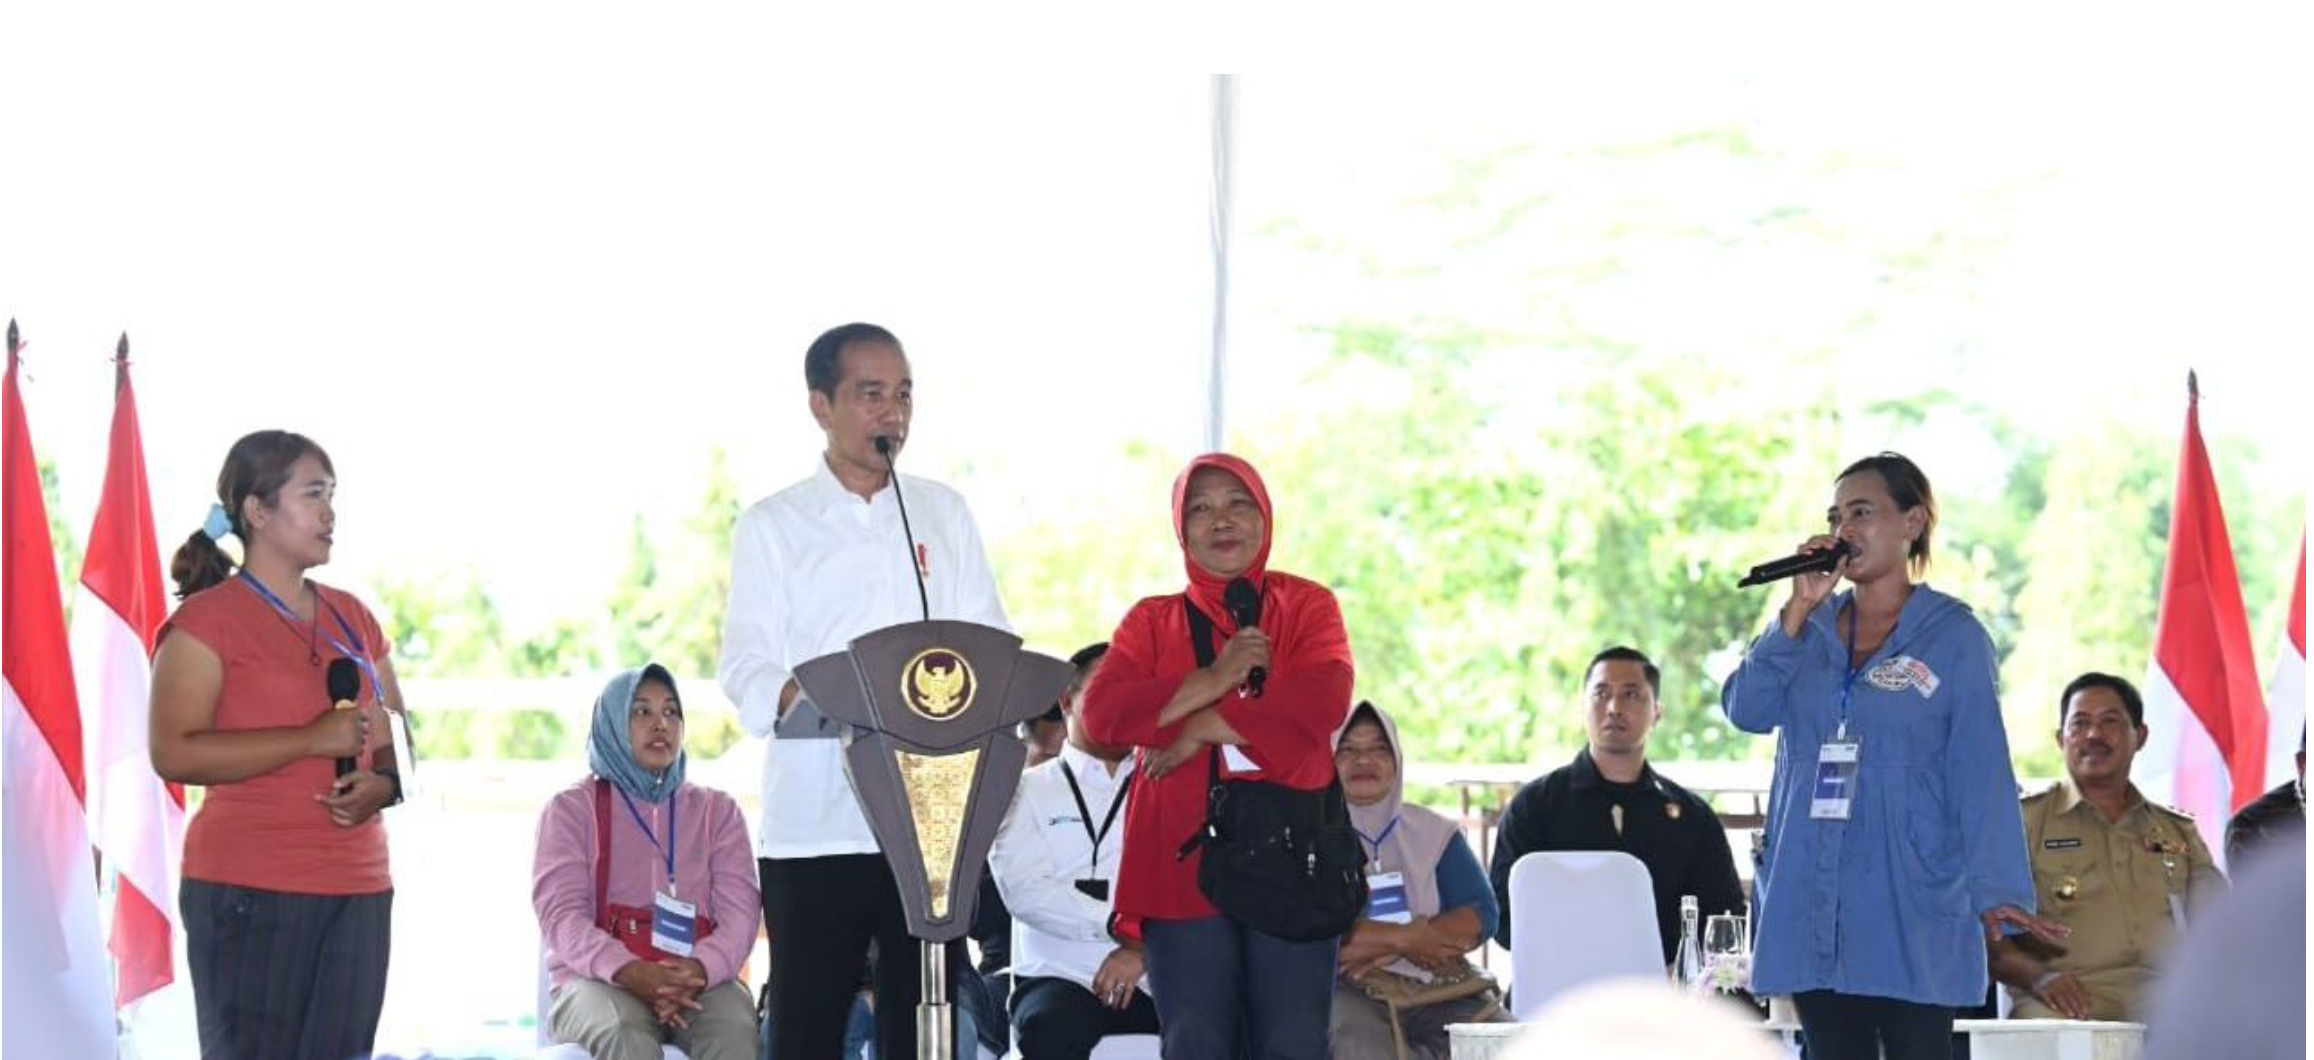 Sukses Sinergi Permodalan Nasional Madani - Holding Ultra Mikro,Presiden Beri Apresiasi